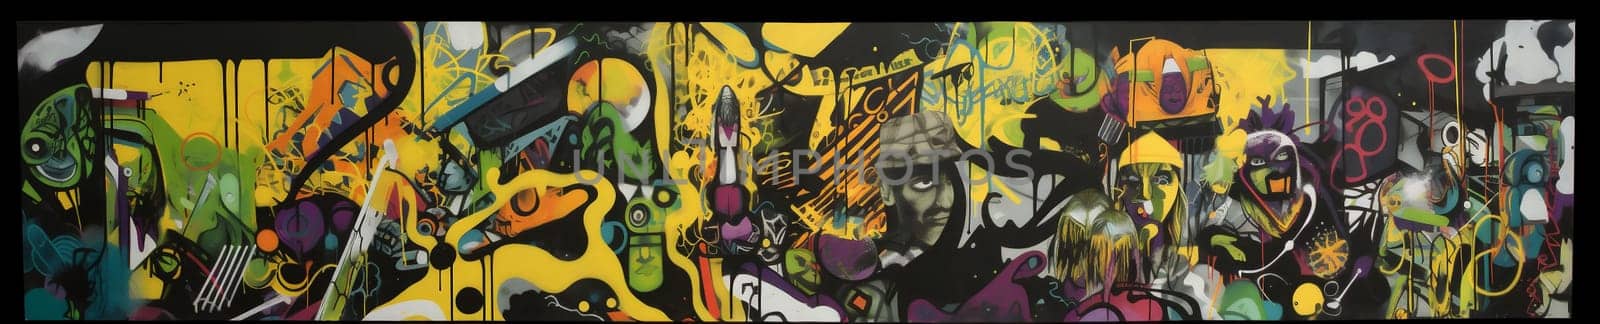 art yellow wall graffiti background banner spray urban backdrop paint colourful. Generative AI. by Vichizh